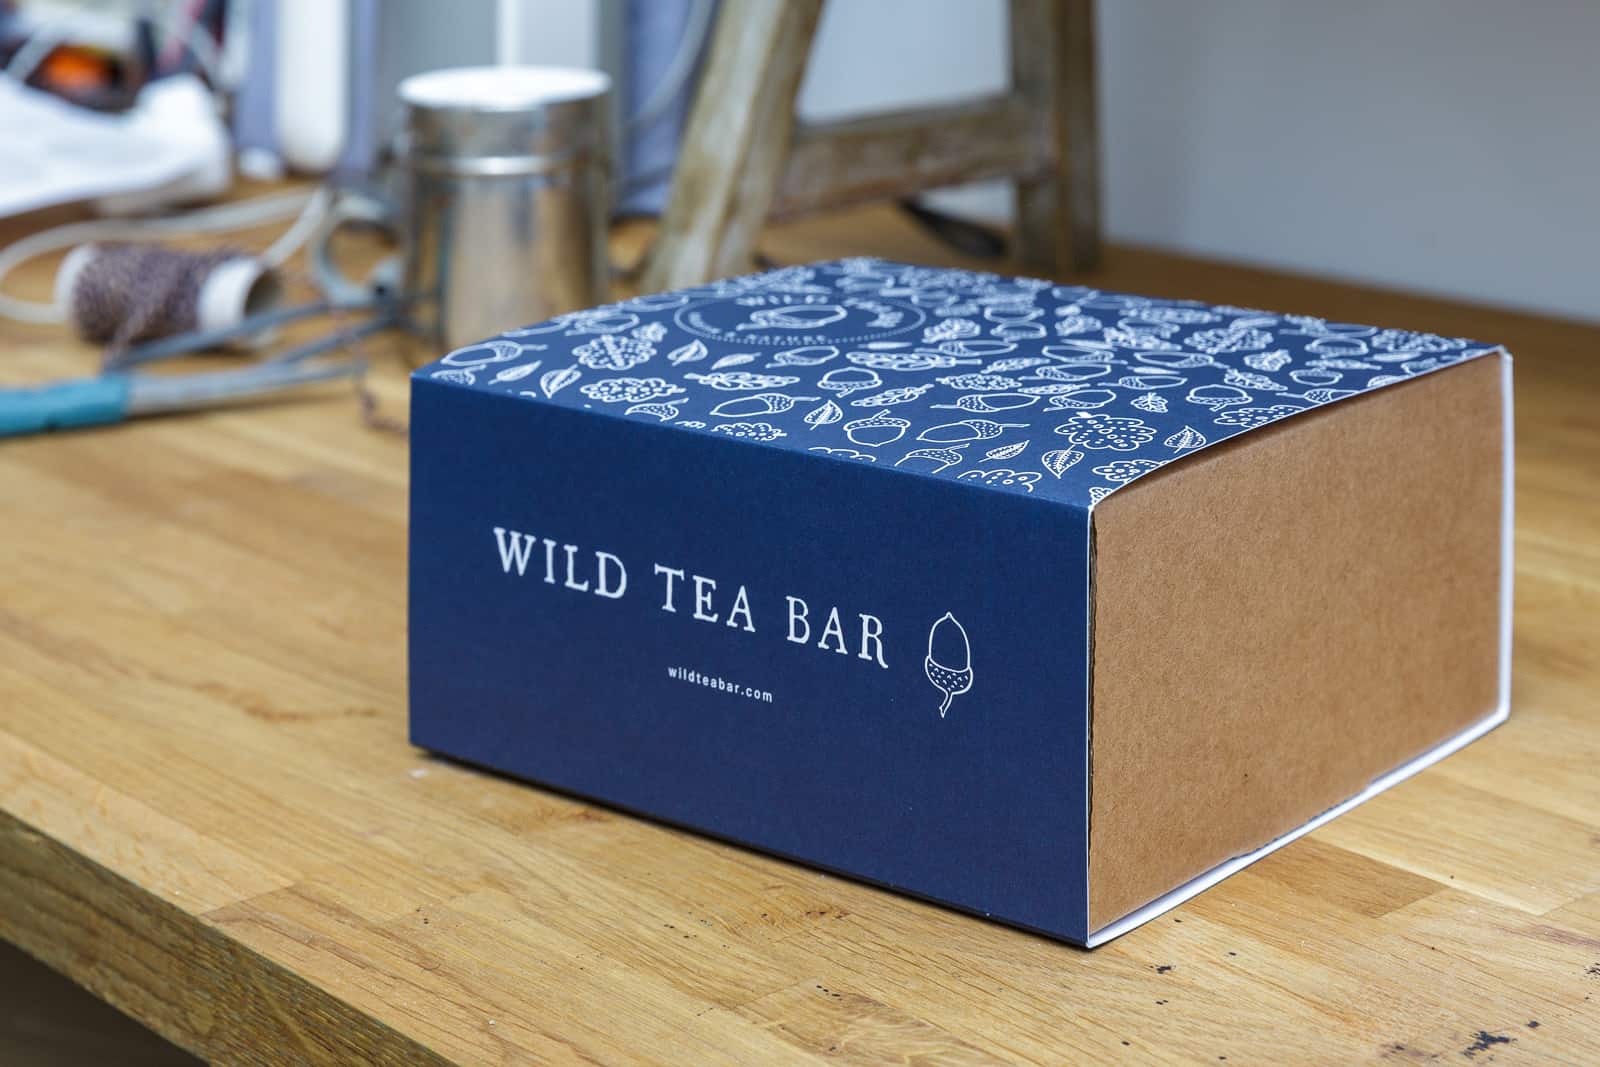 wild tea bar box of brownies with branded sleeve